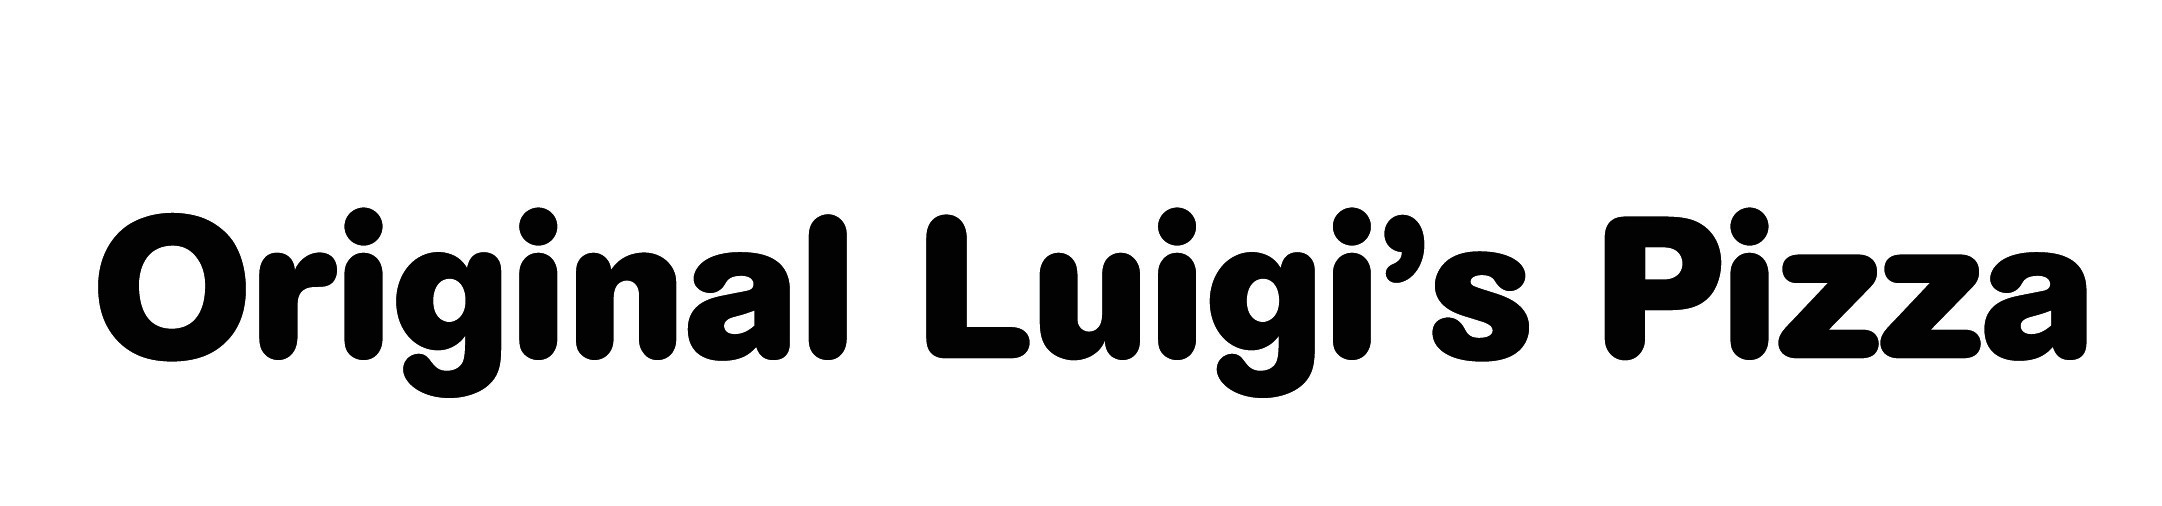 Original Luigi's Pizza (Silver)